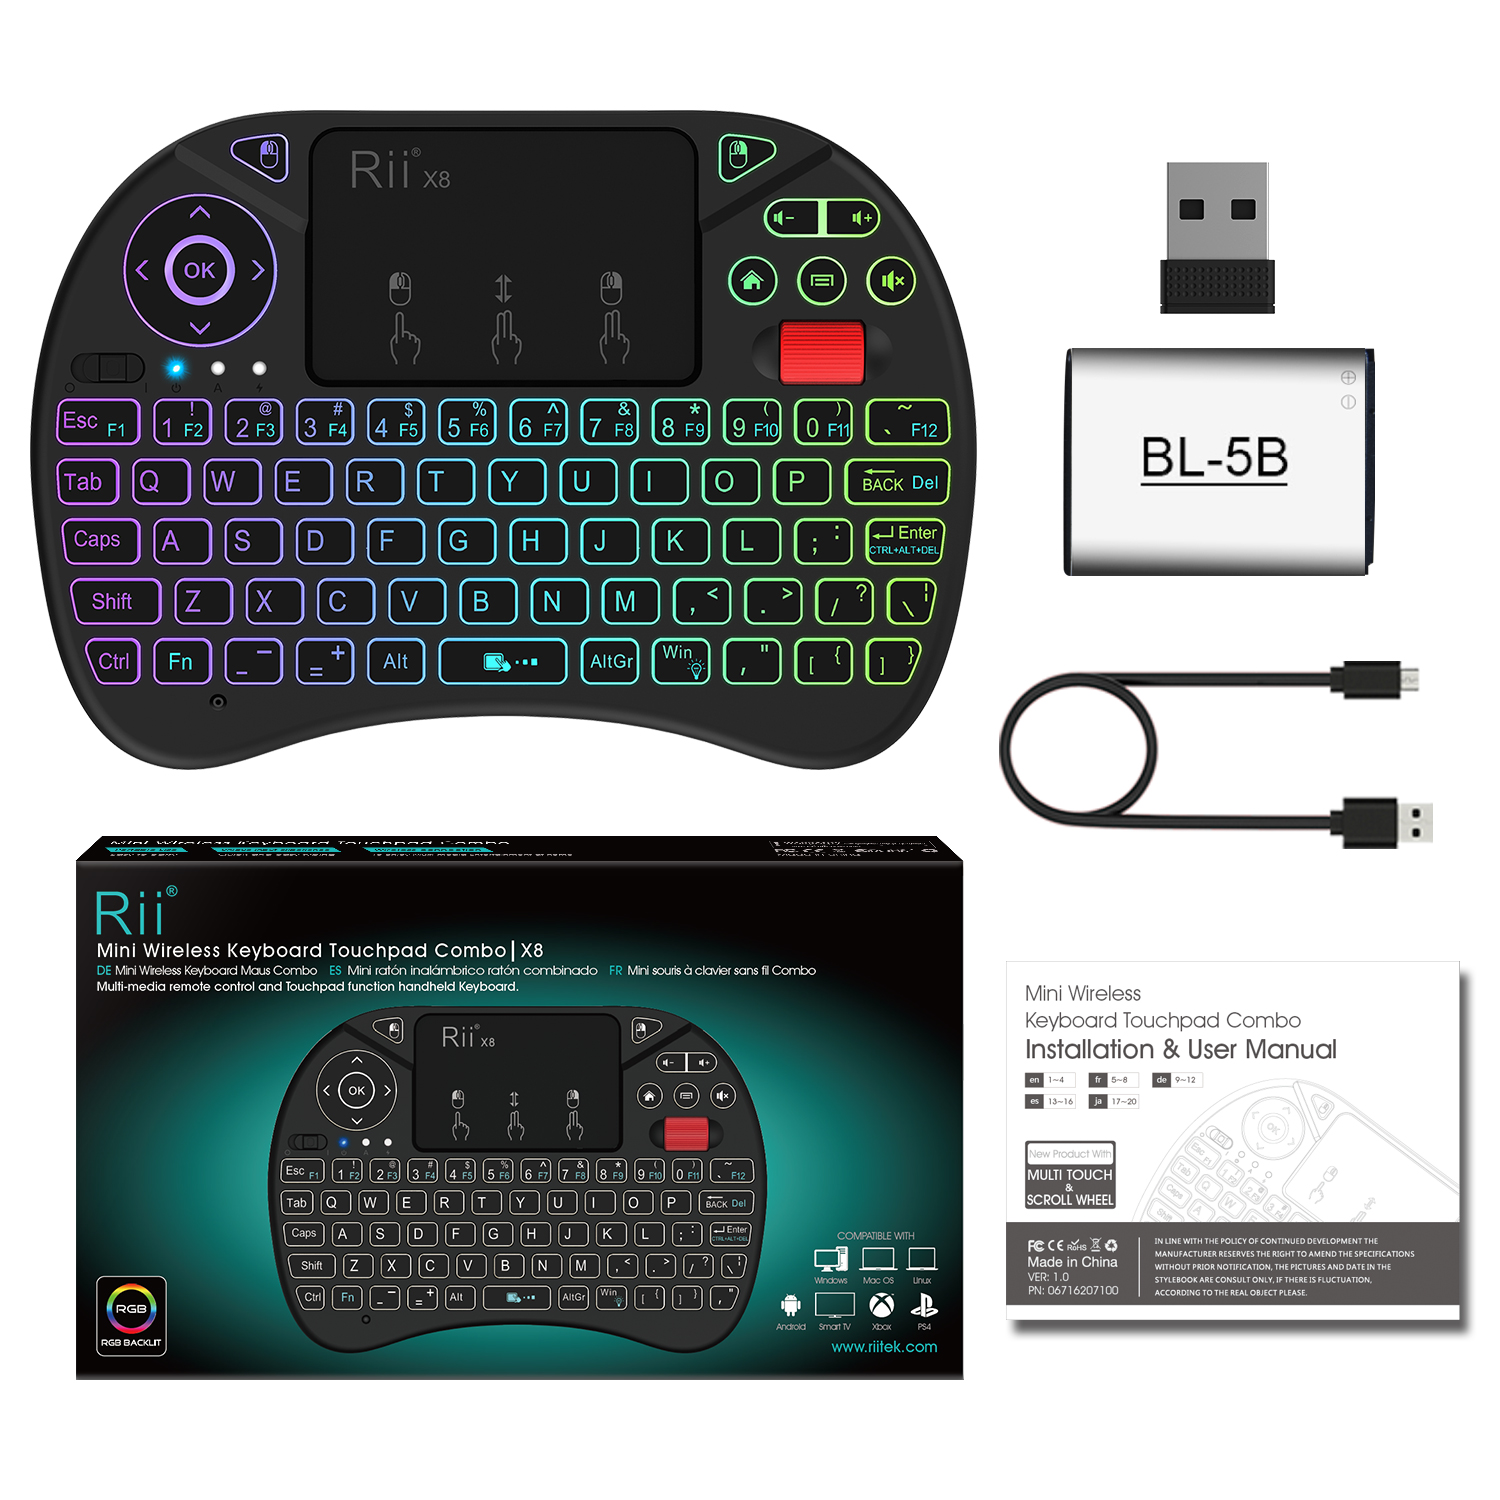 Rii Product X8- Mini Keyboard,wireless keyboard,bluetooth keyboard